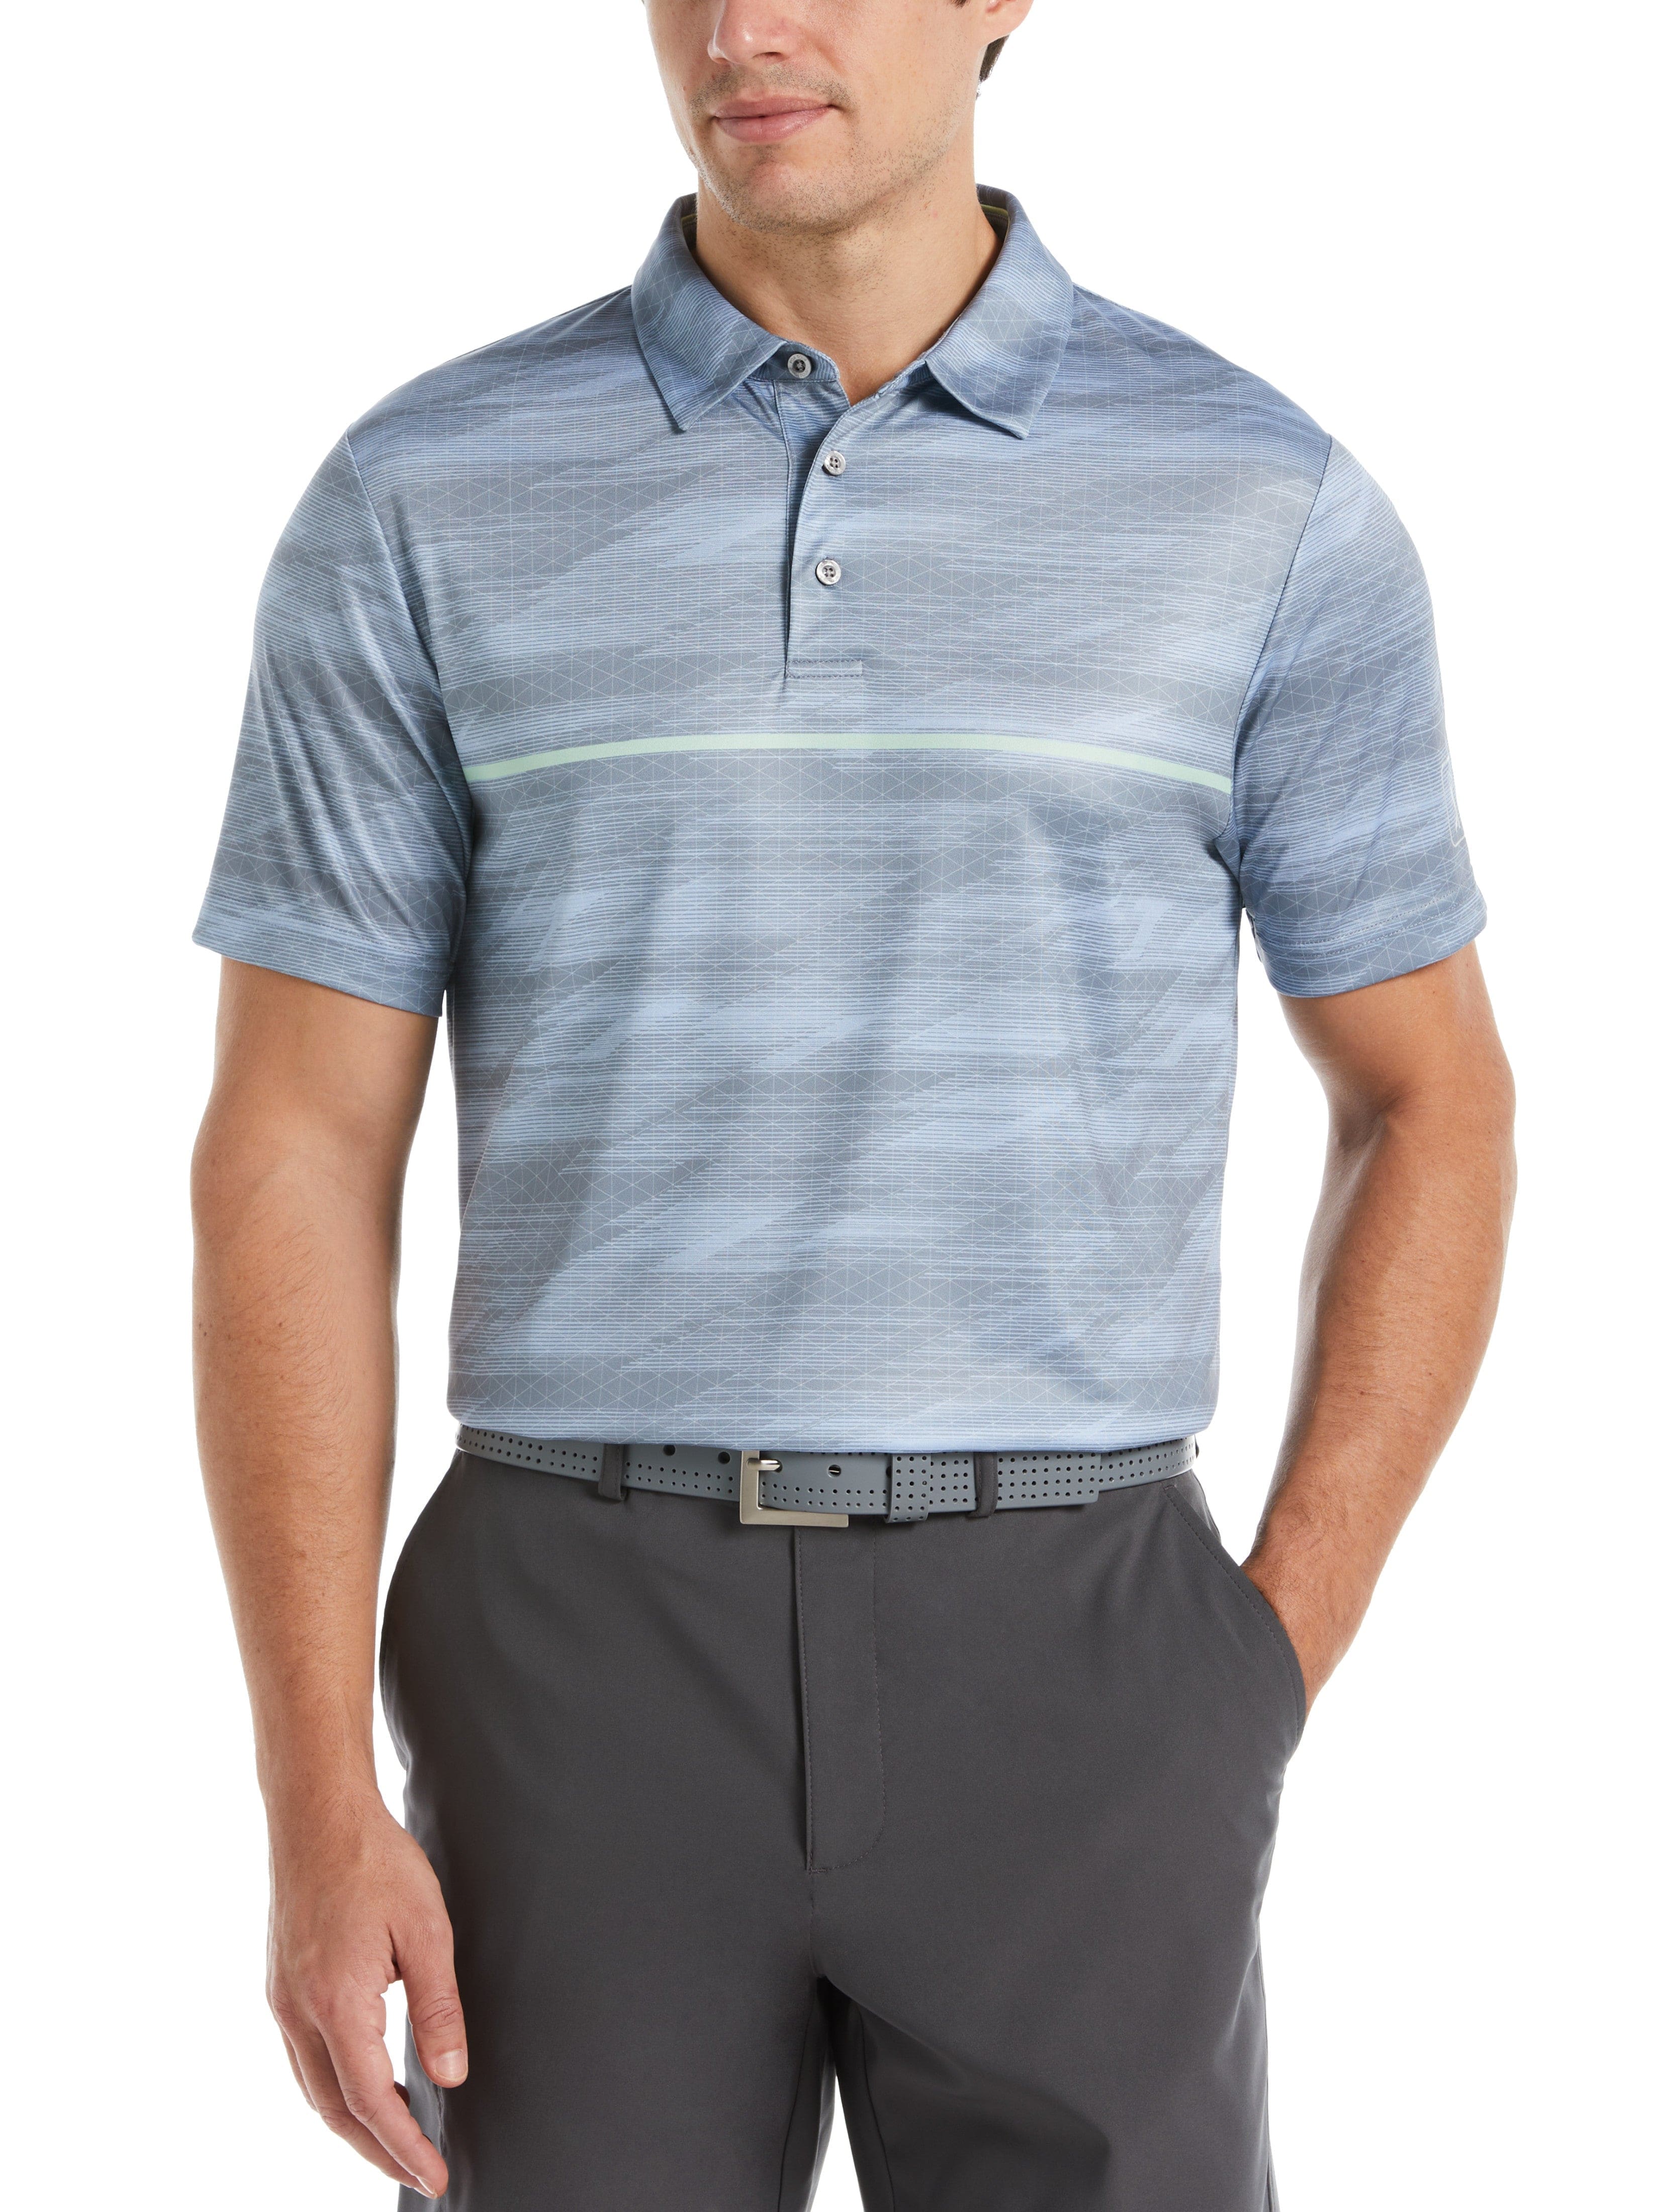 PGA TOUR Apparel Mens Digitized Chest Stripe Print Golf Polo Shirt, Size XL, Tradewinds Gray, 100% Polyester | Golf Apparel Shop